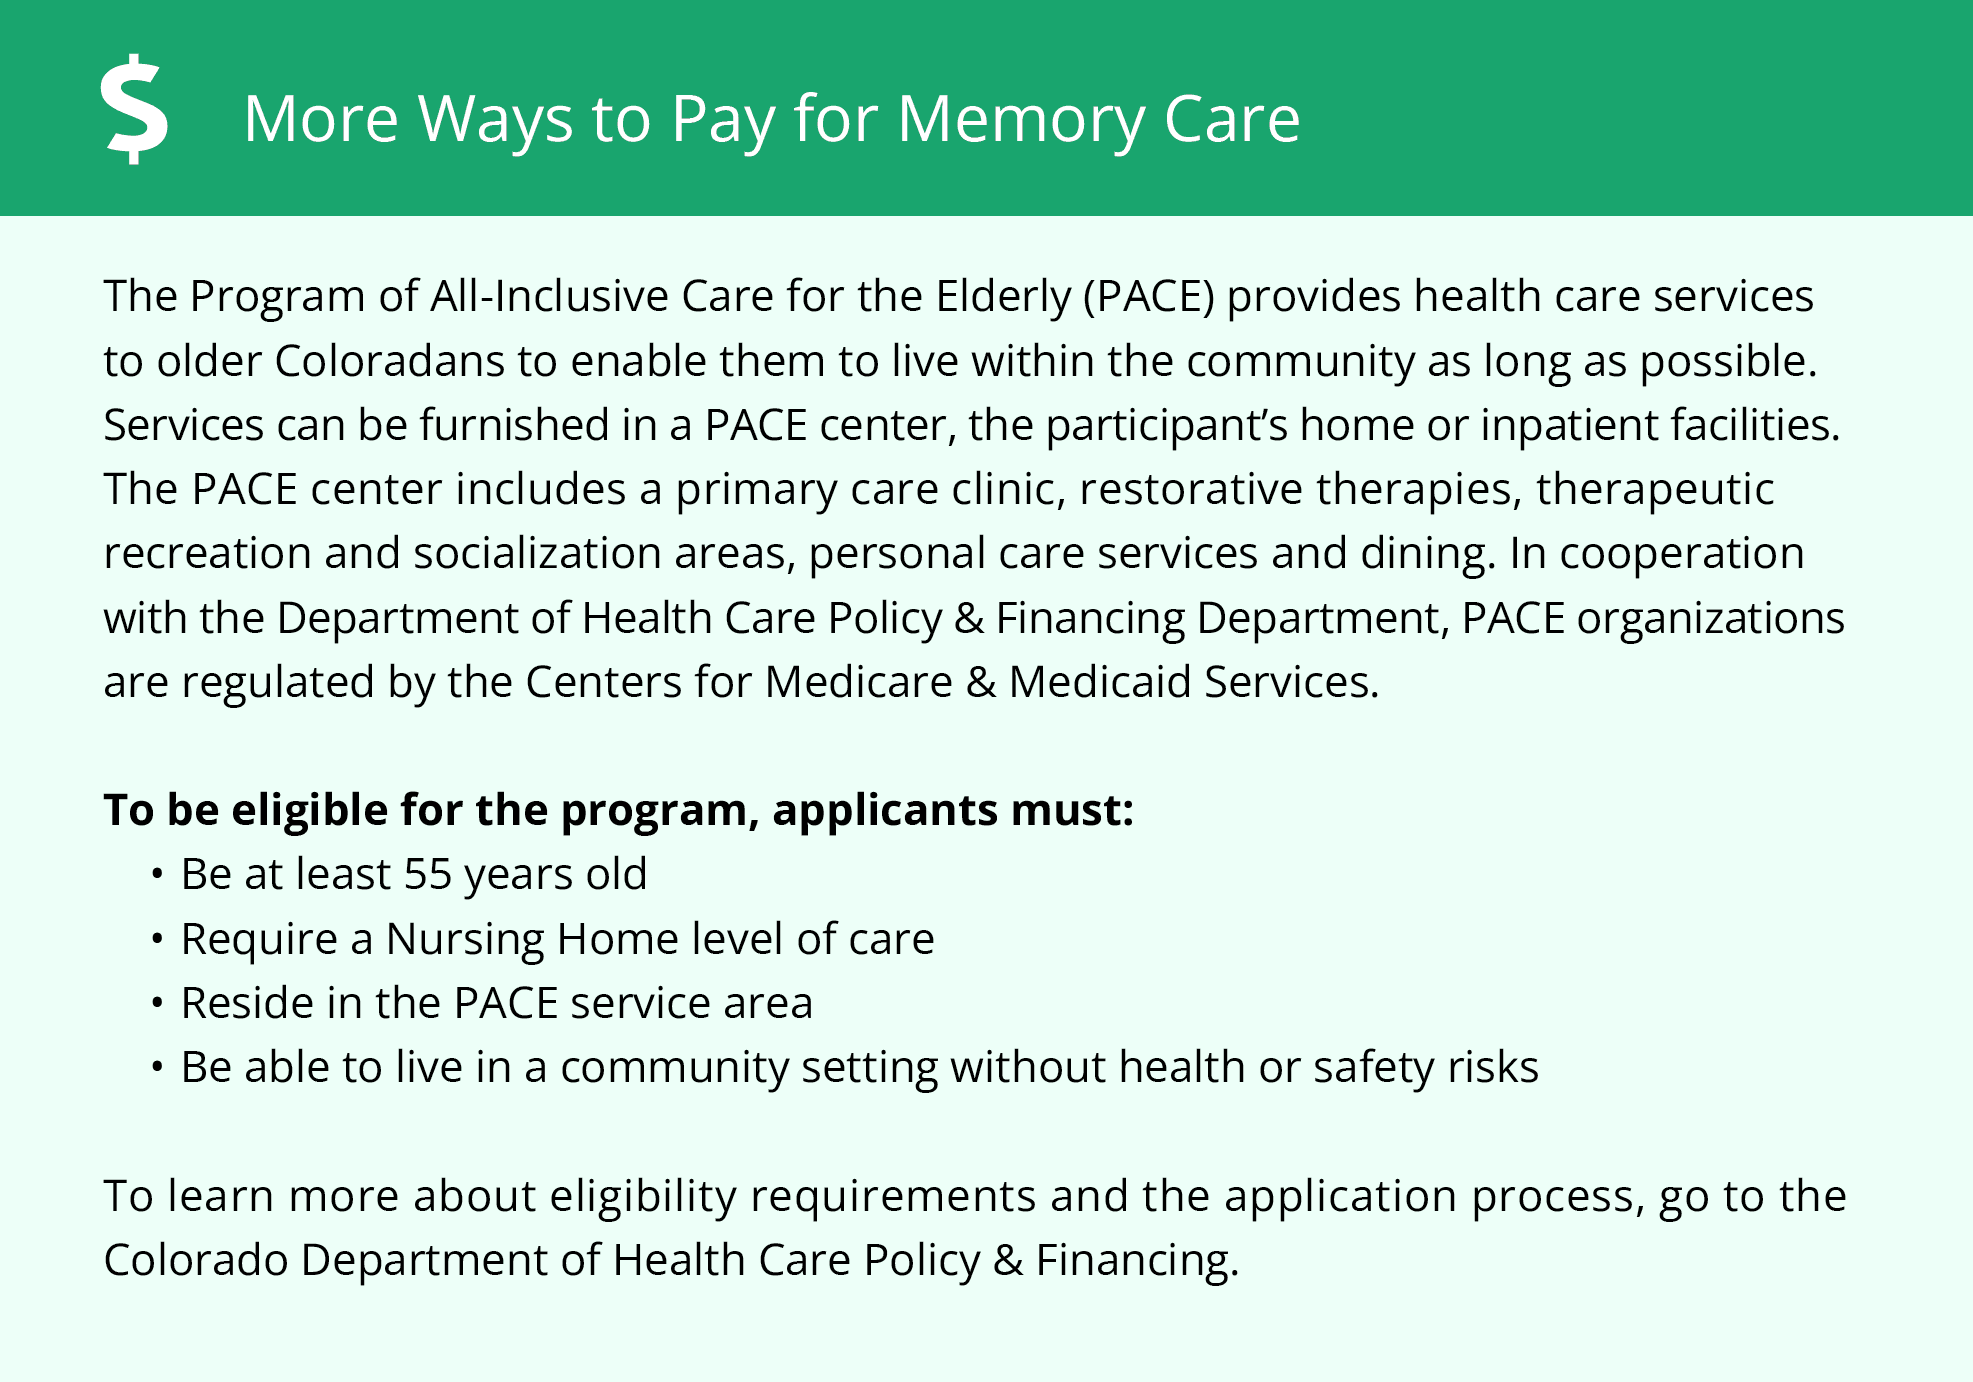 More Ways to Pay for Memory Care - Colorado